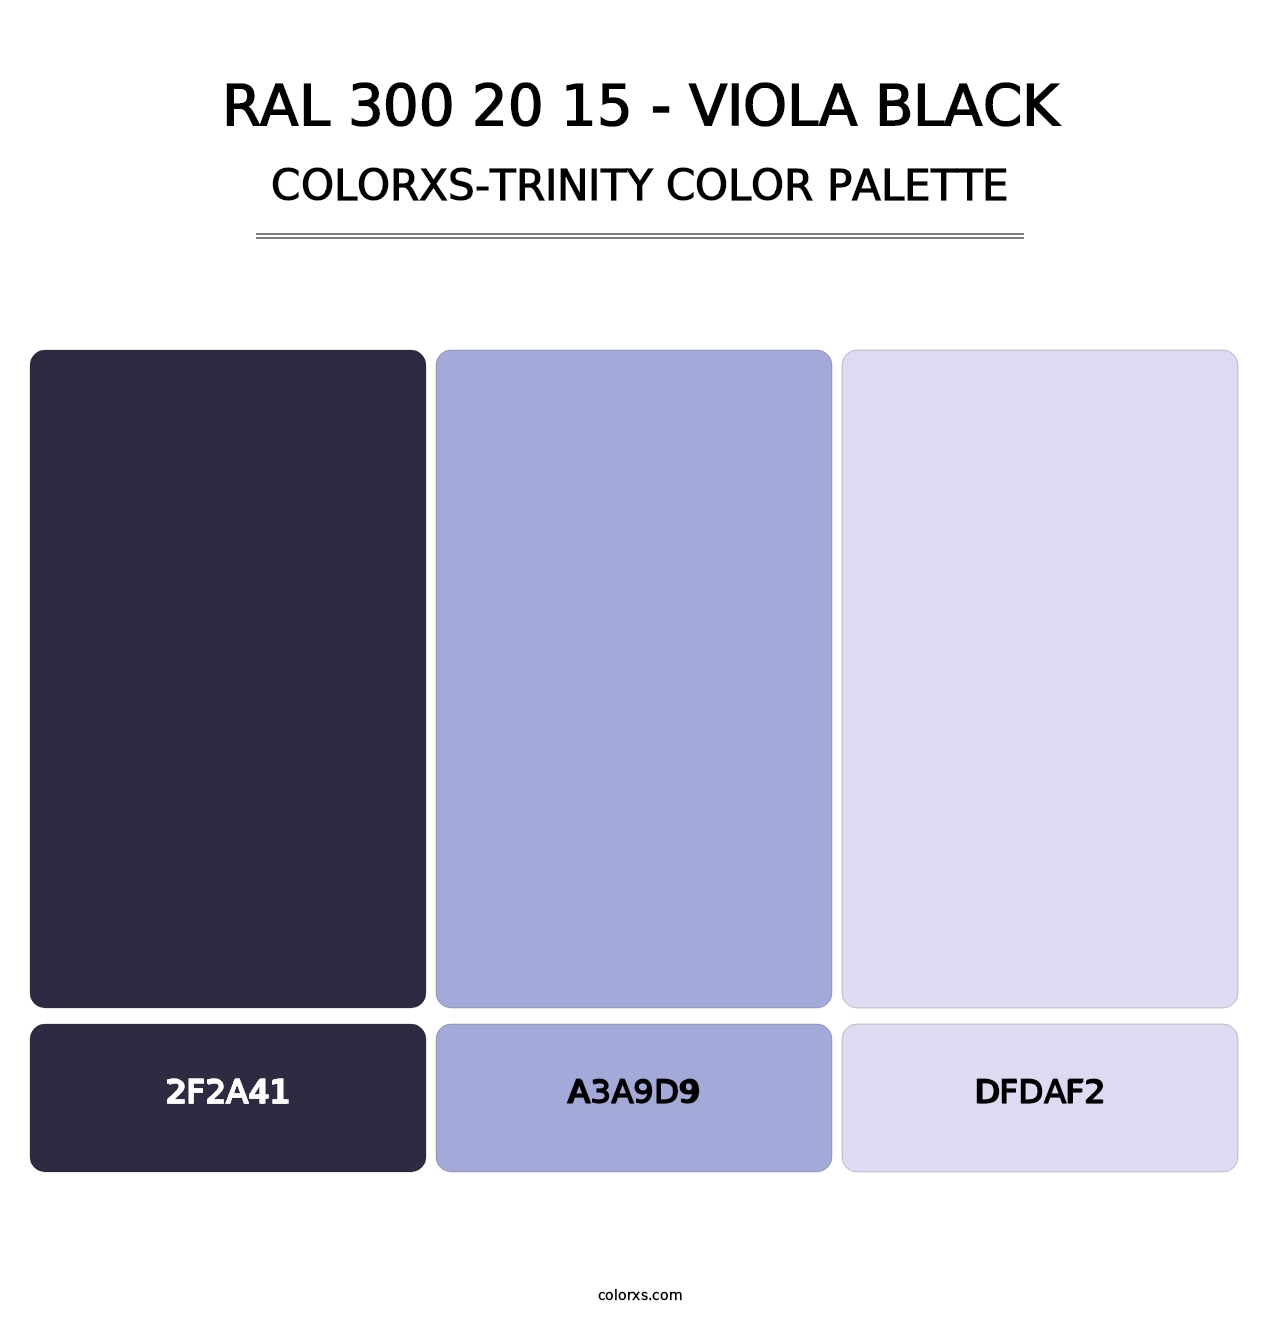 RAL 300 20 15 - Viola Black - Colorxs Trinity Palette